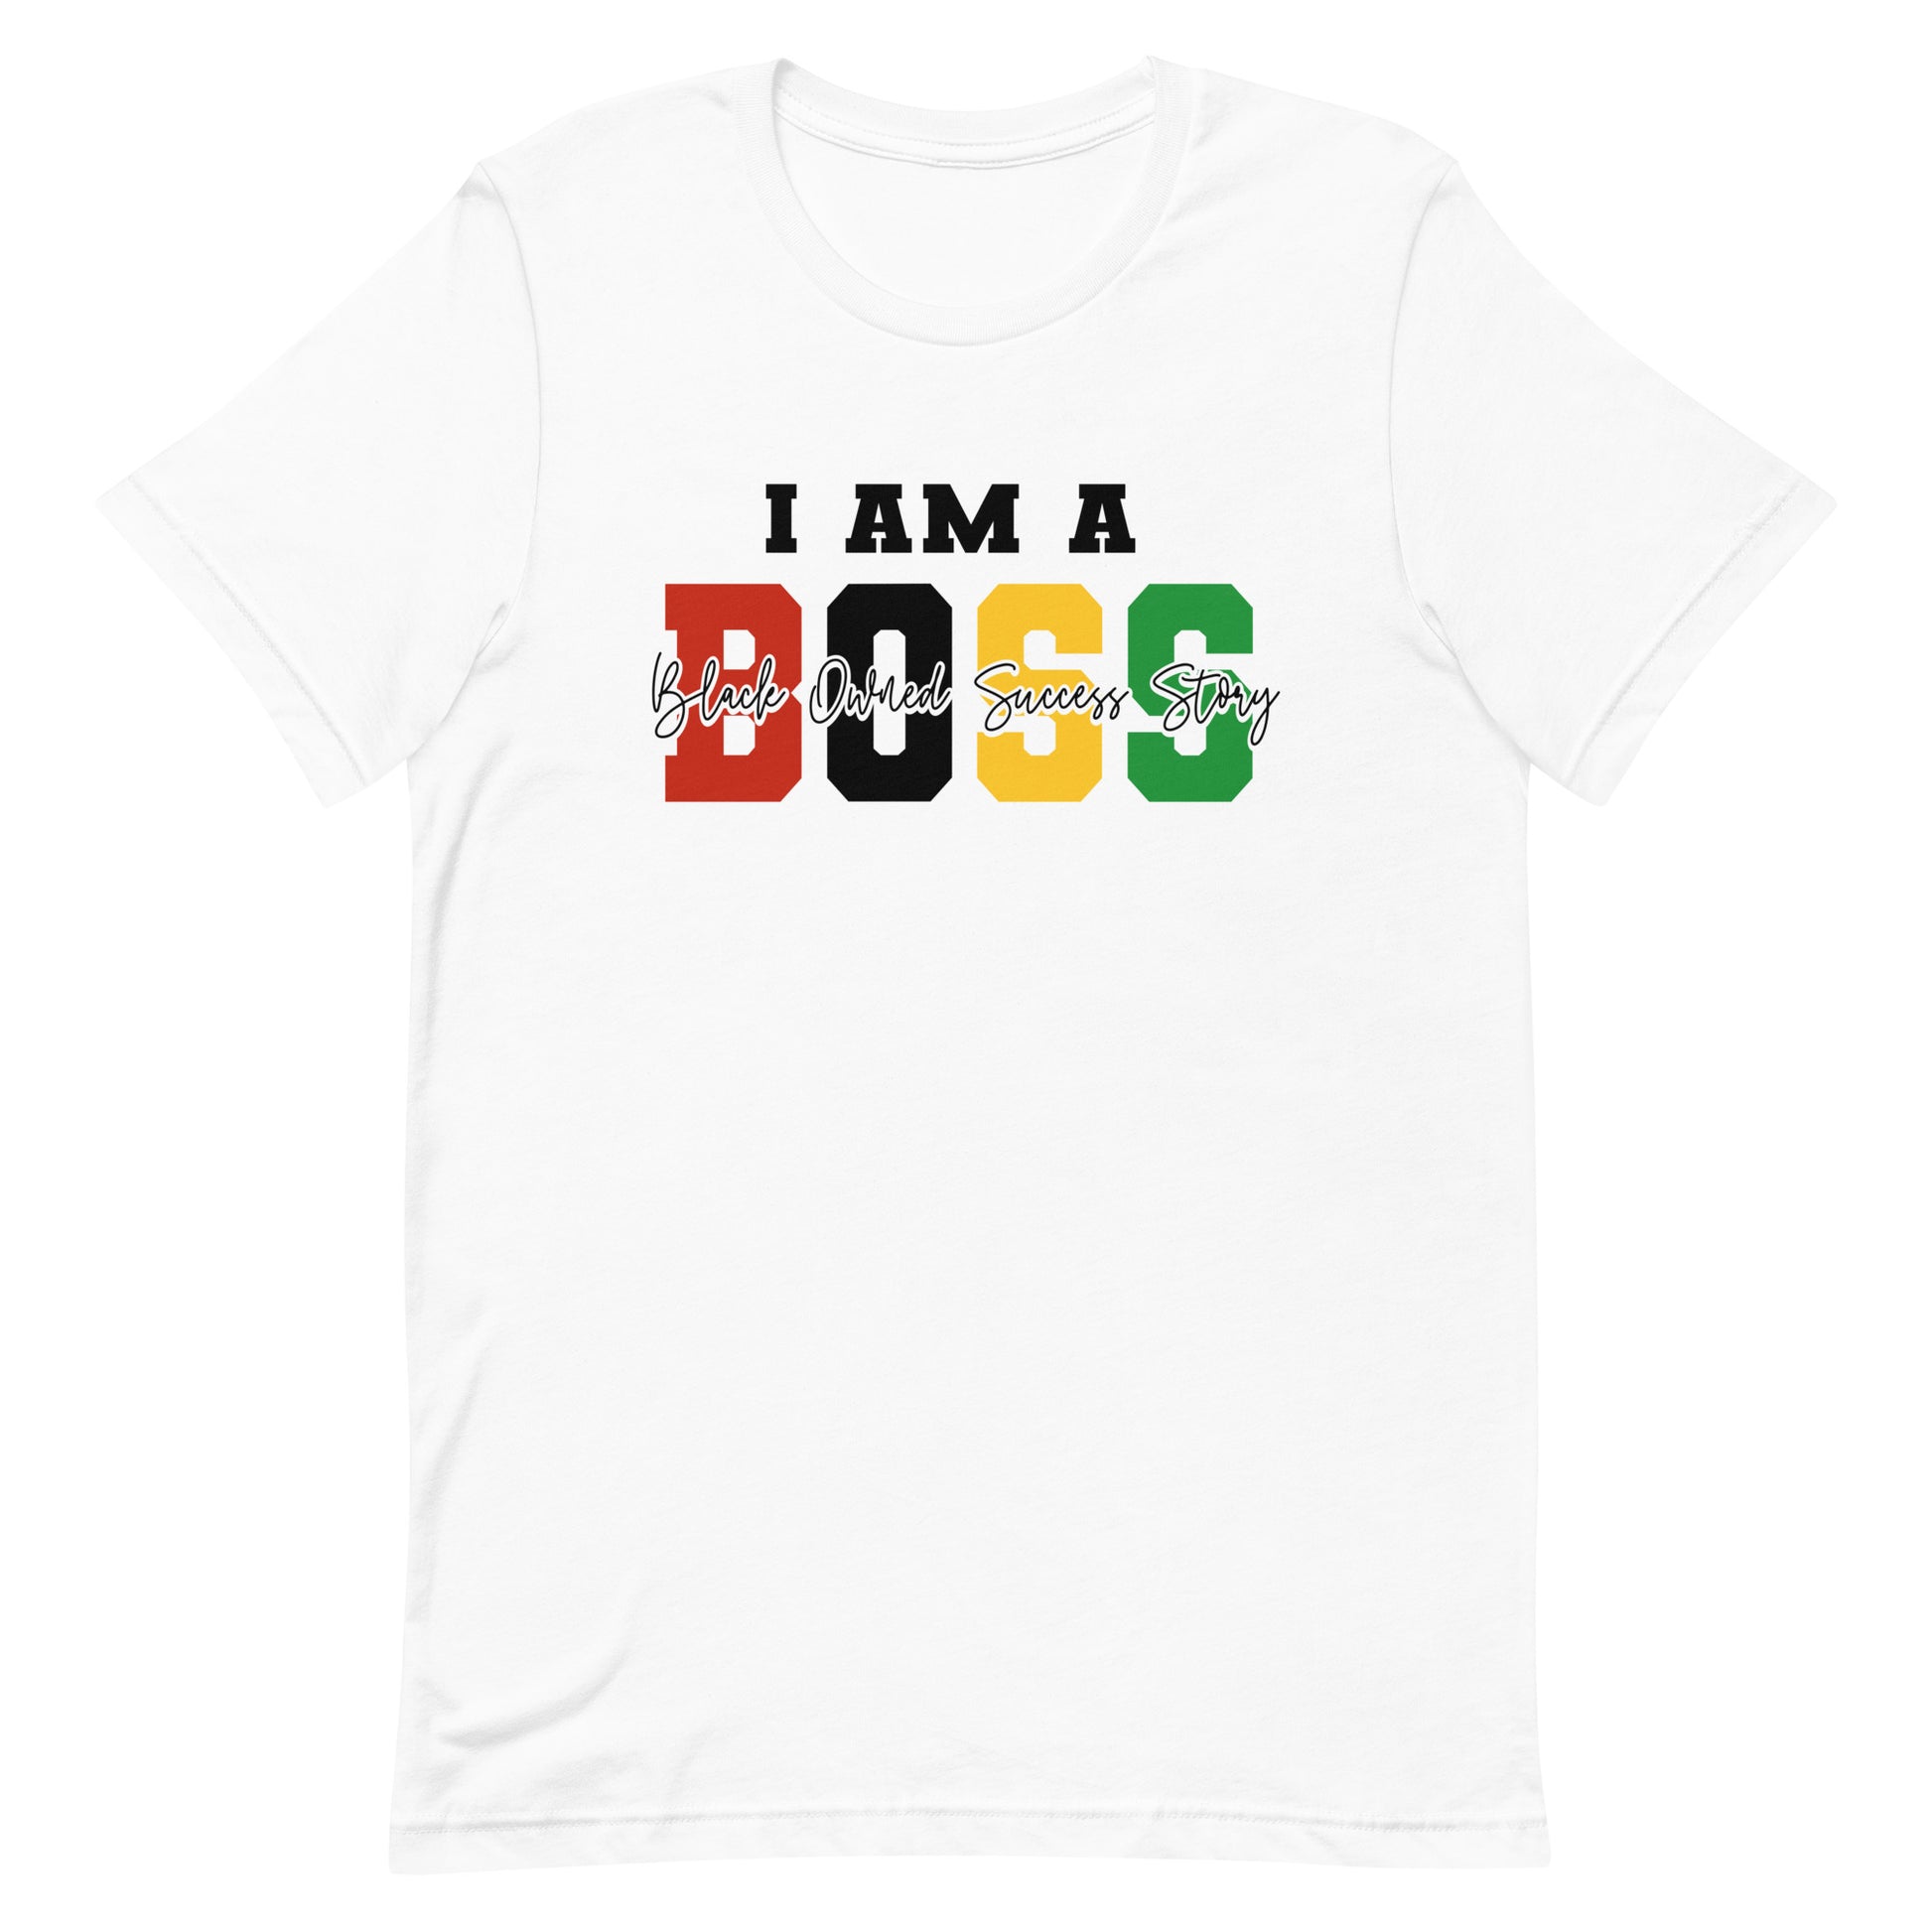 I'm A BOSS (Black Owned Success Story)t-shirt - TiffanyzKlozet